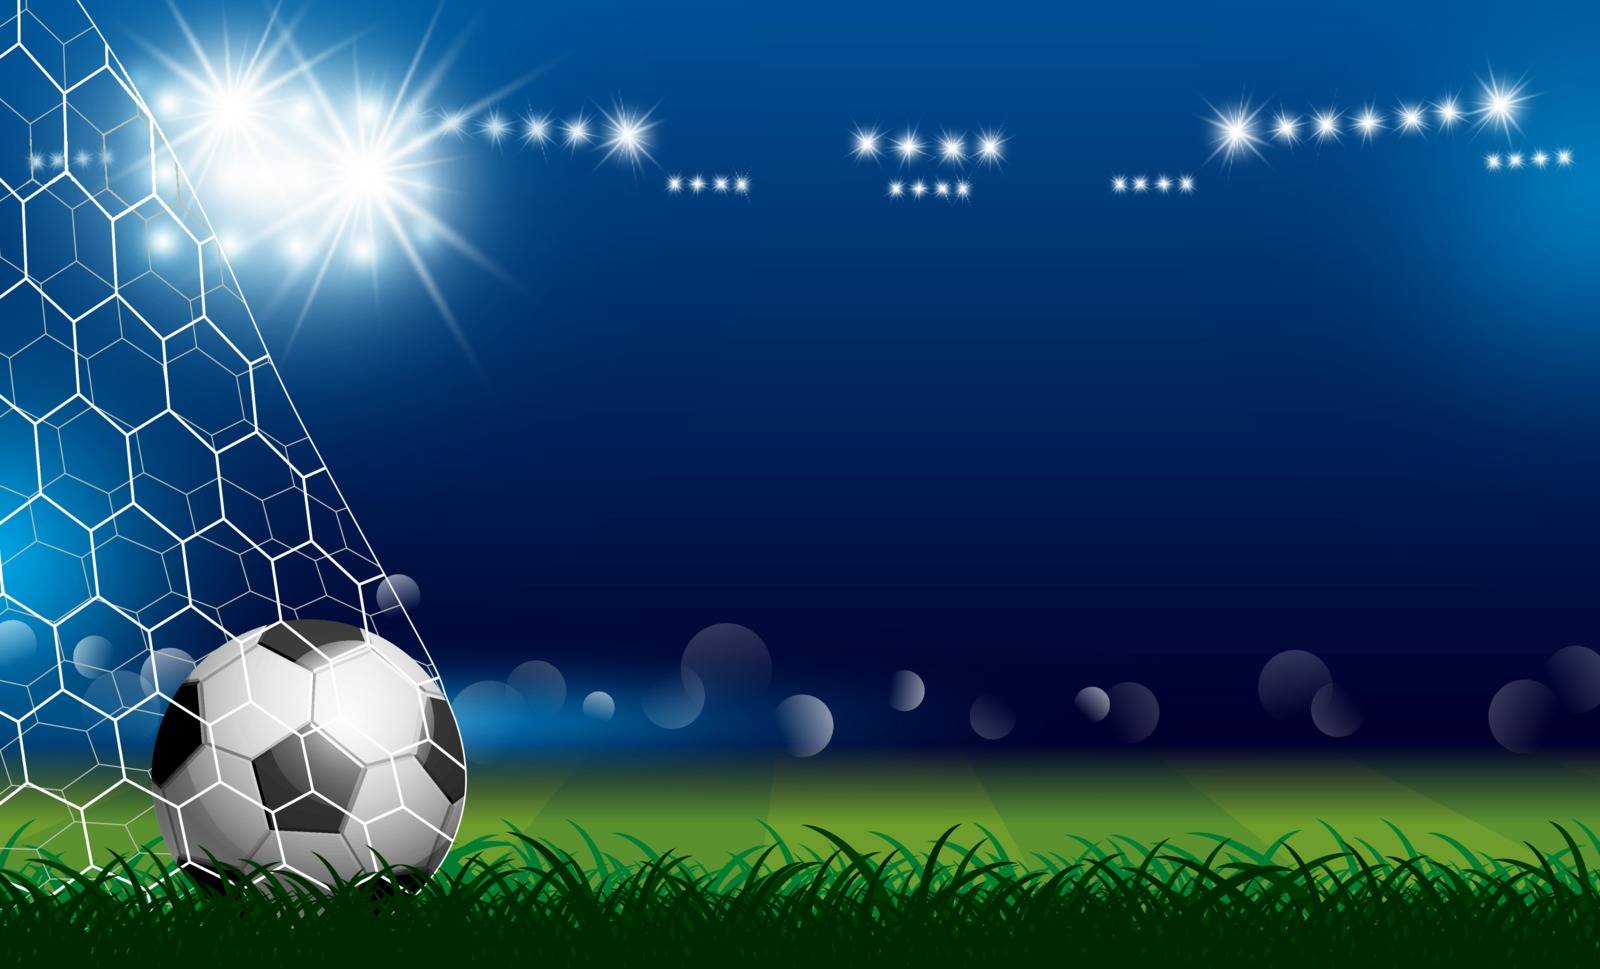 Soccer ball in goal on grass with spotlight vector illustration